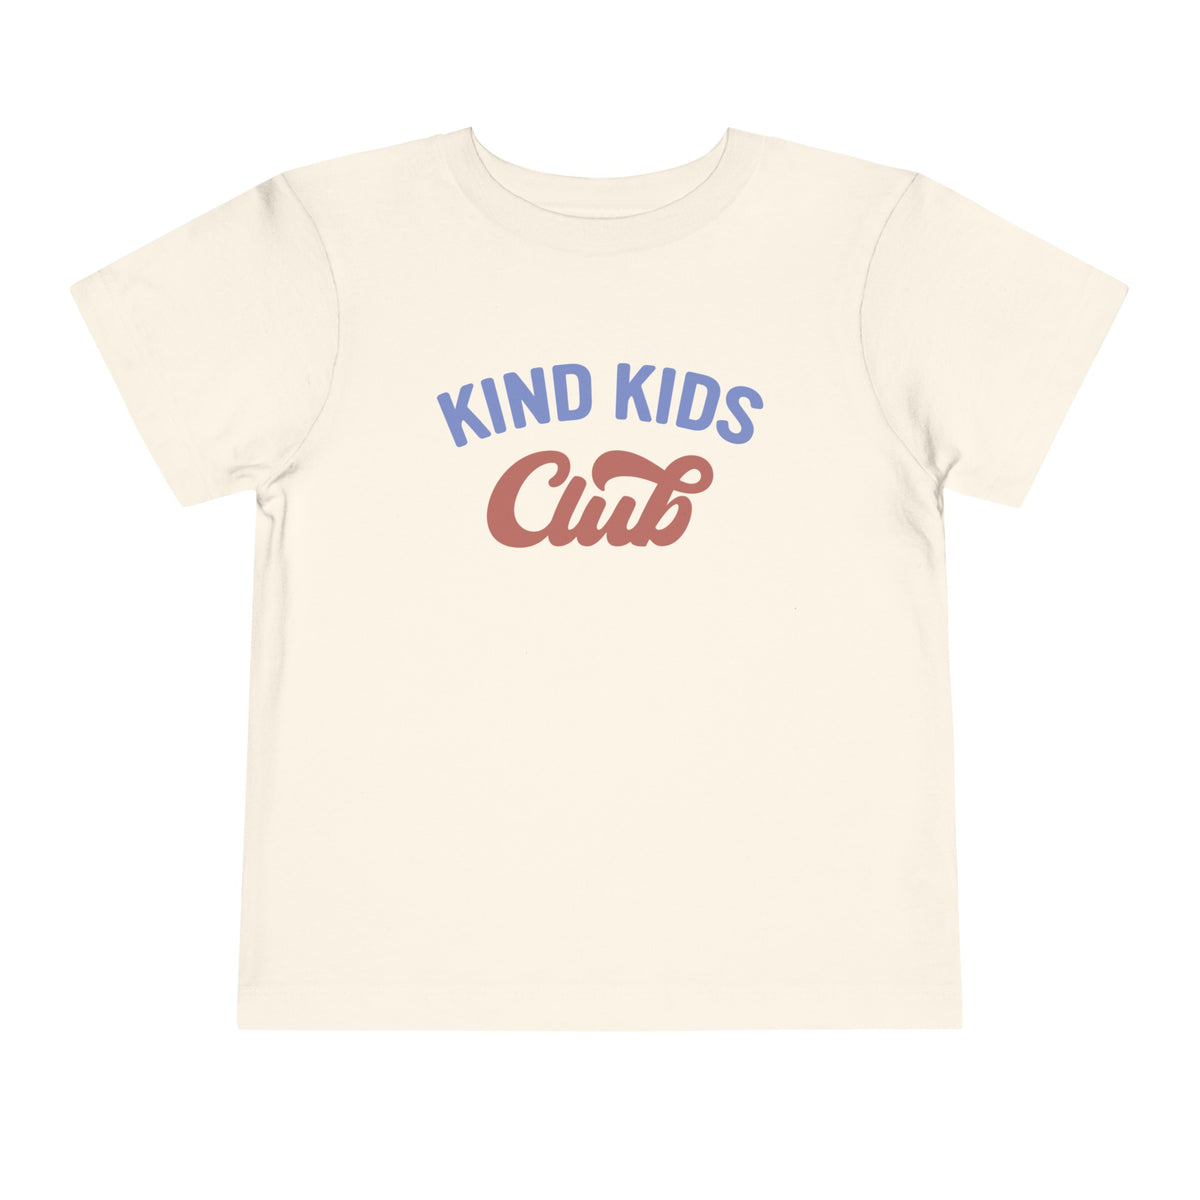 Kind Kids Club Bella Canvas Toddler Short Sleeve Tee